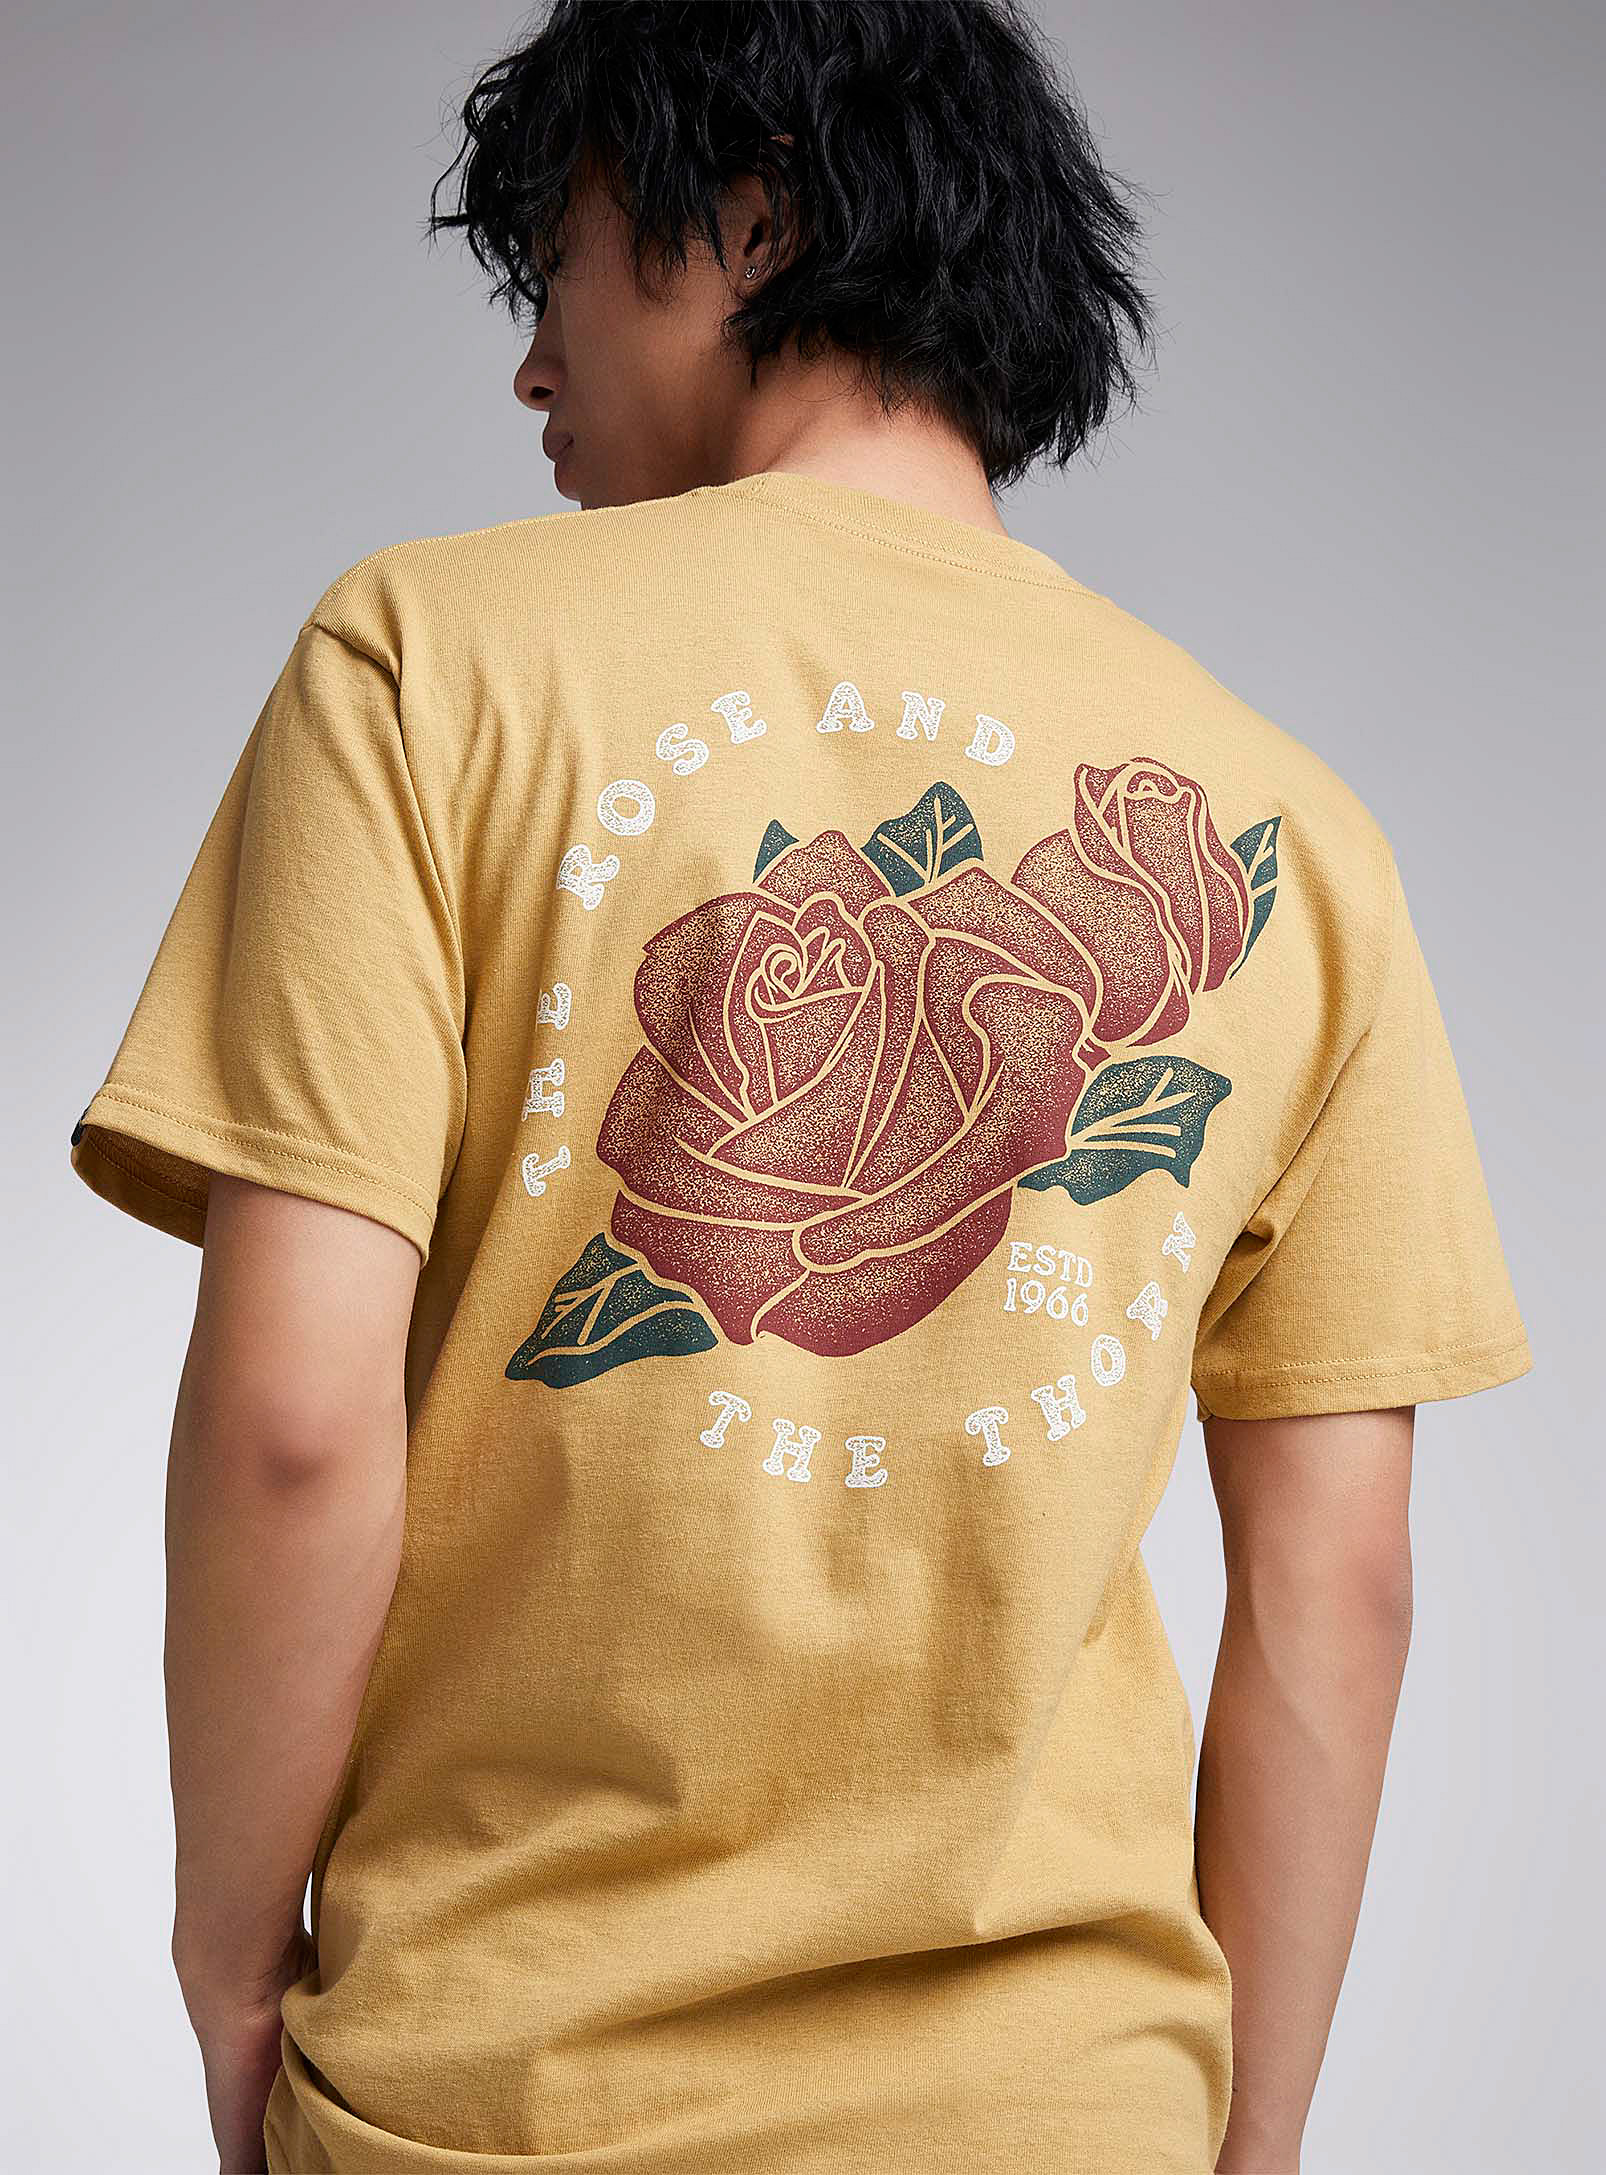 Vans - Men's Rosethorn T-shirt